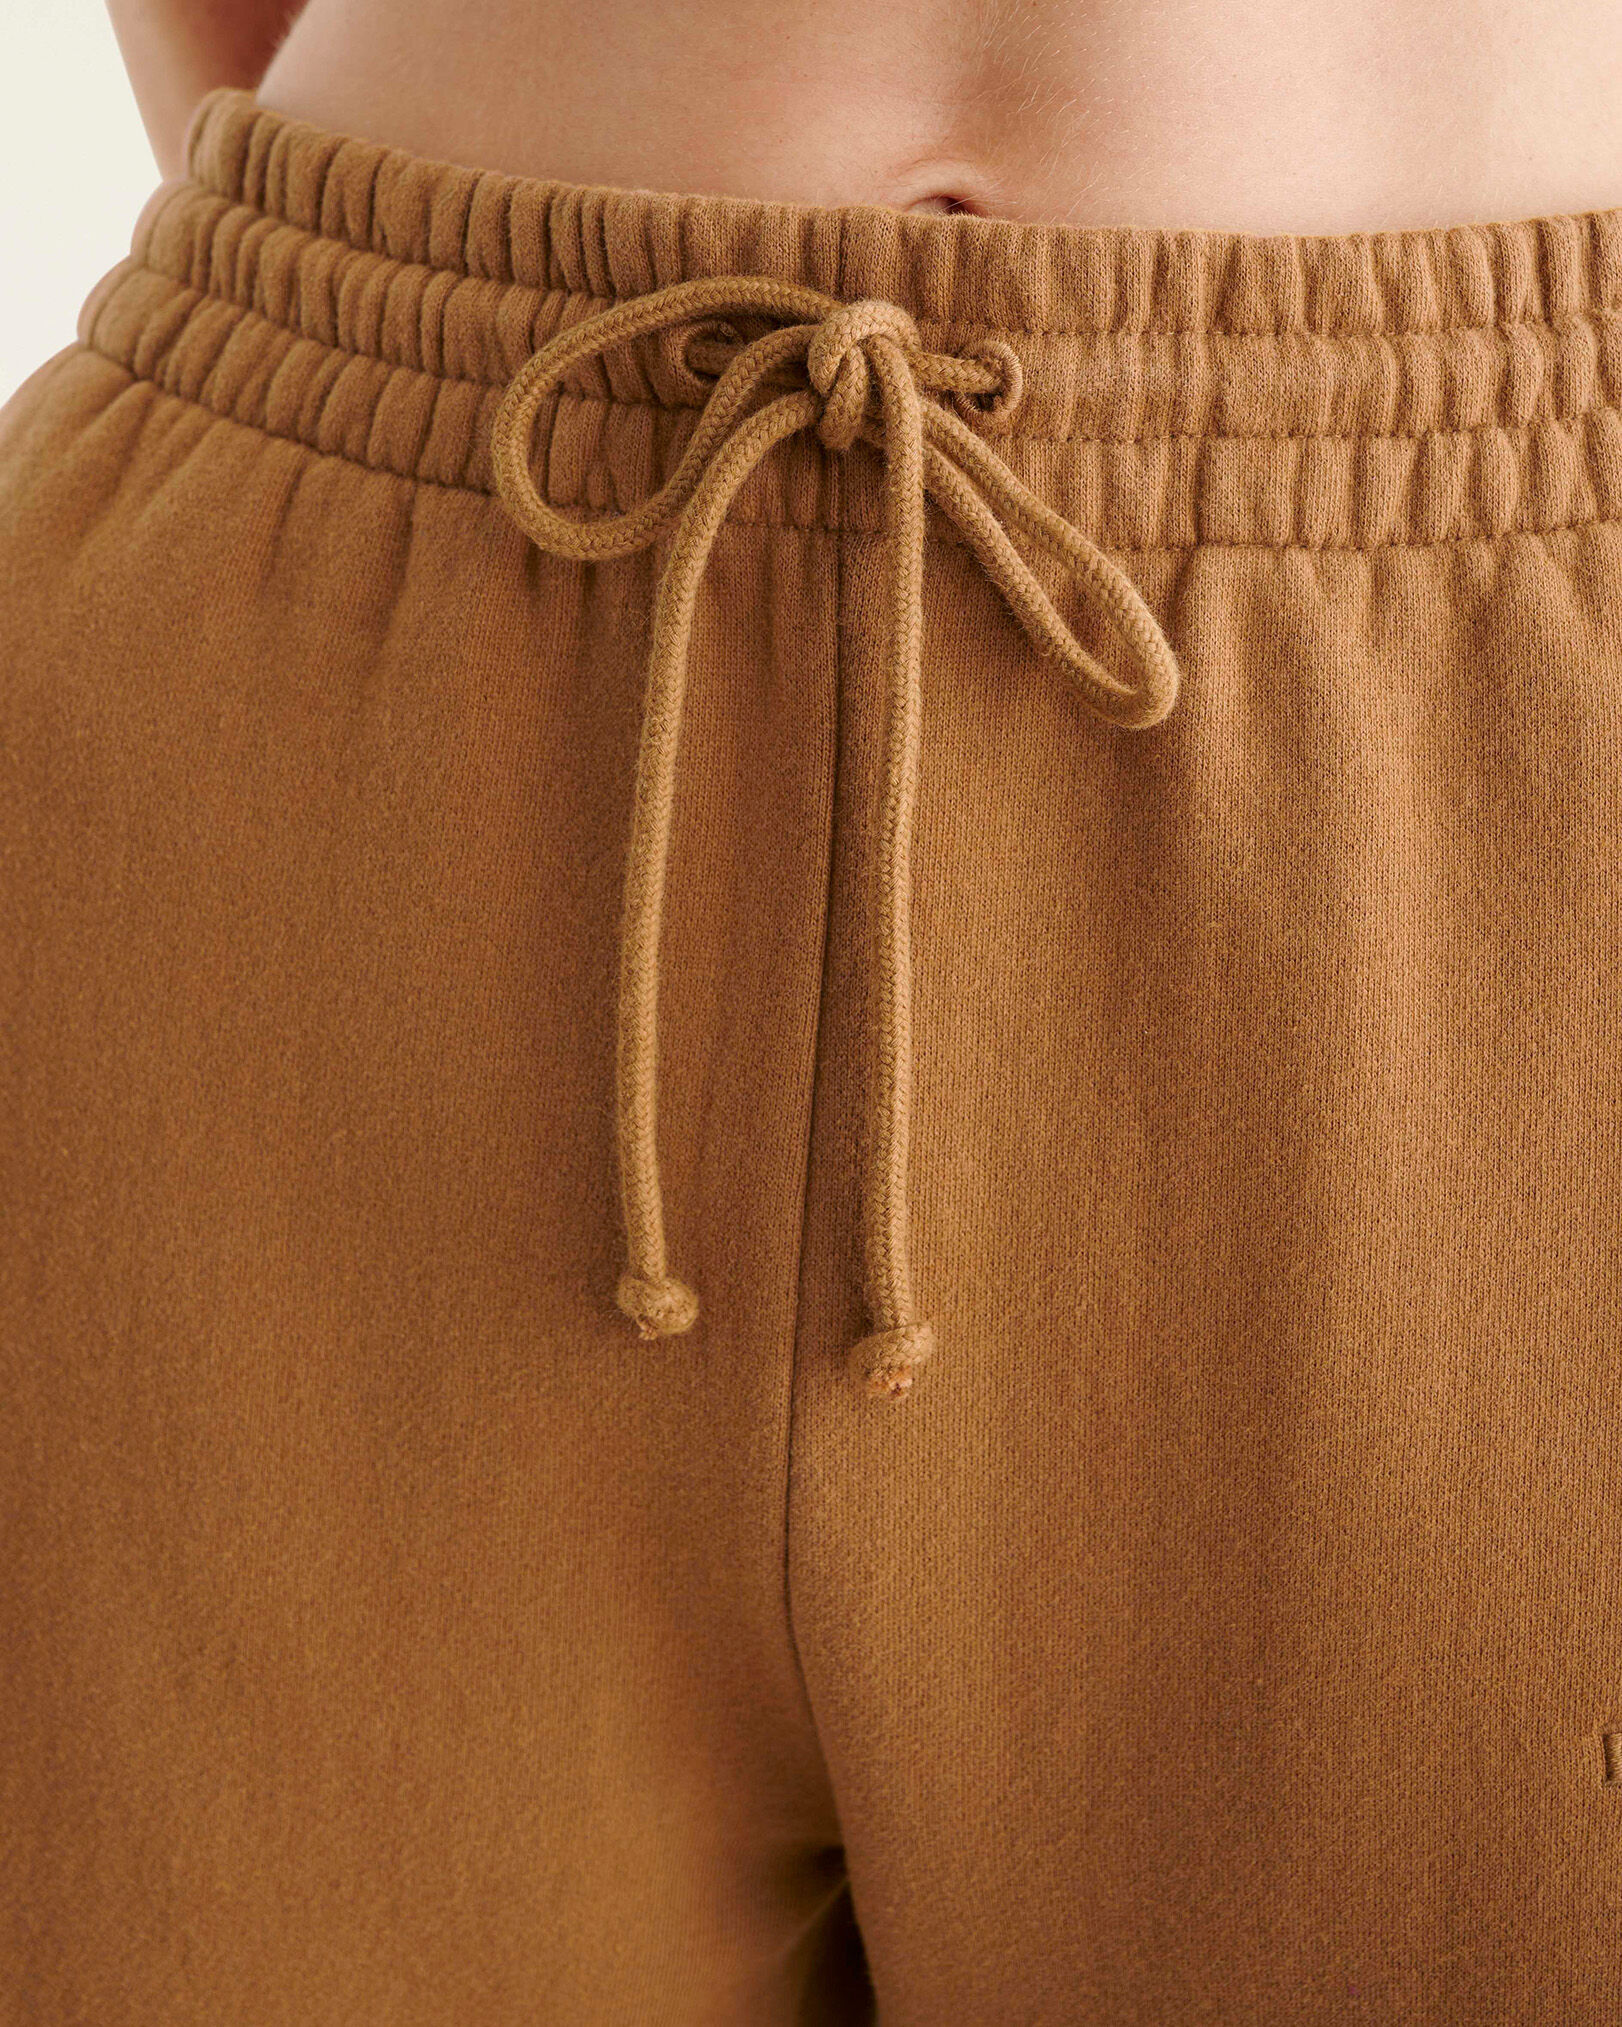 STFX Fleece Sweatpants with pockets